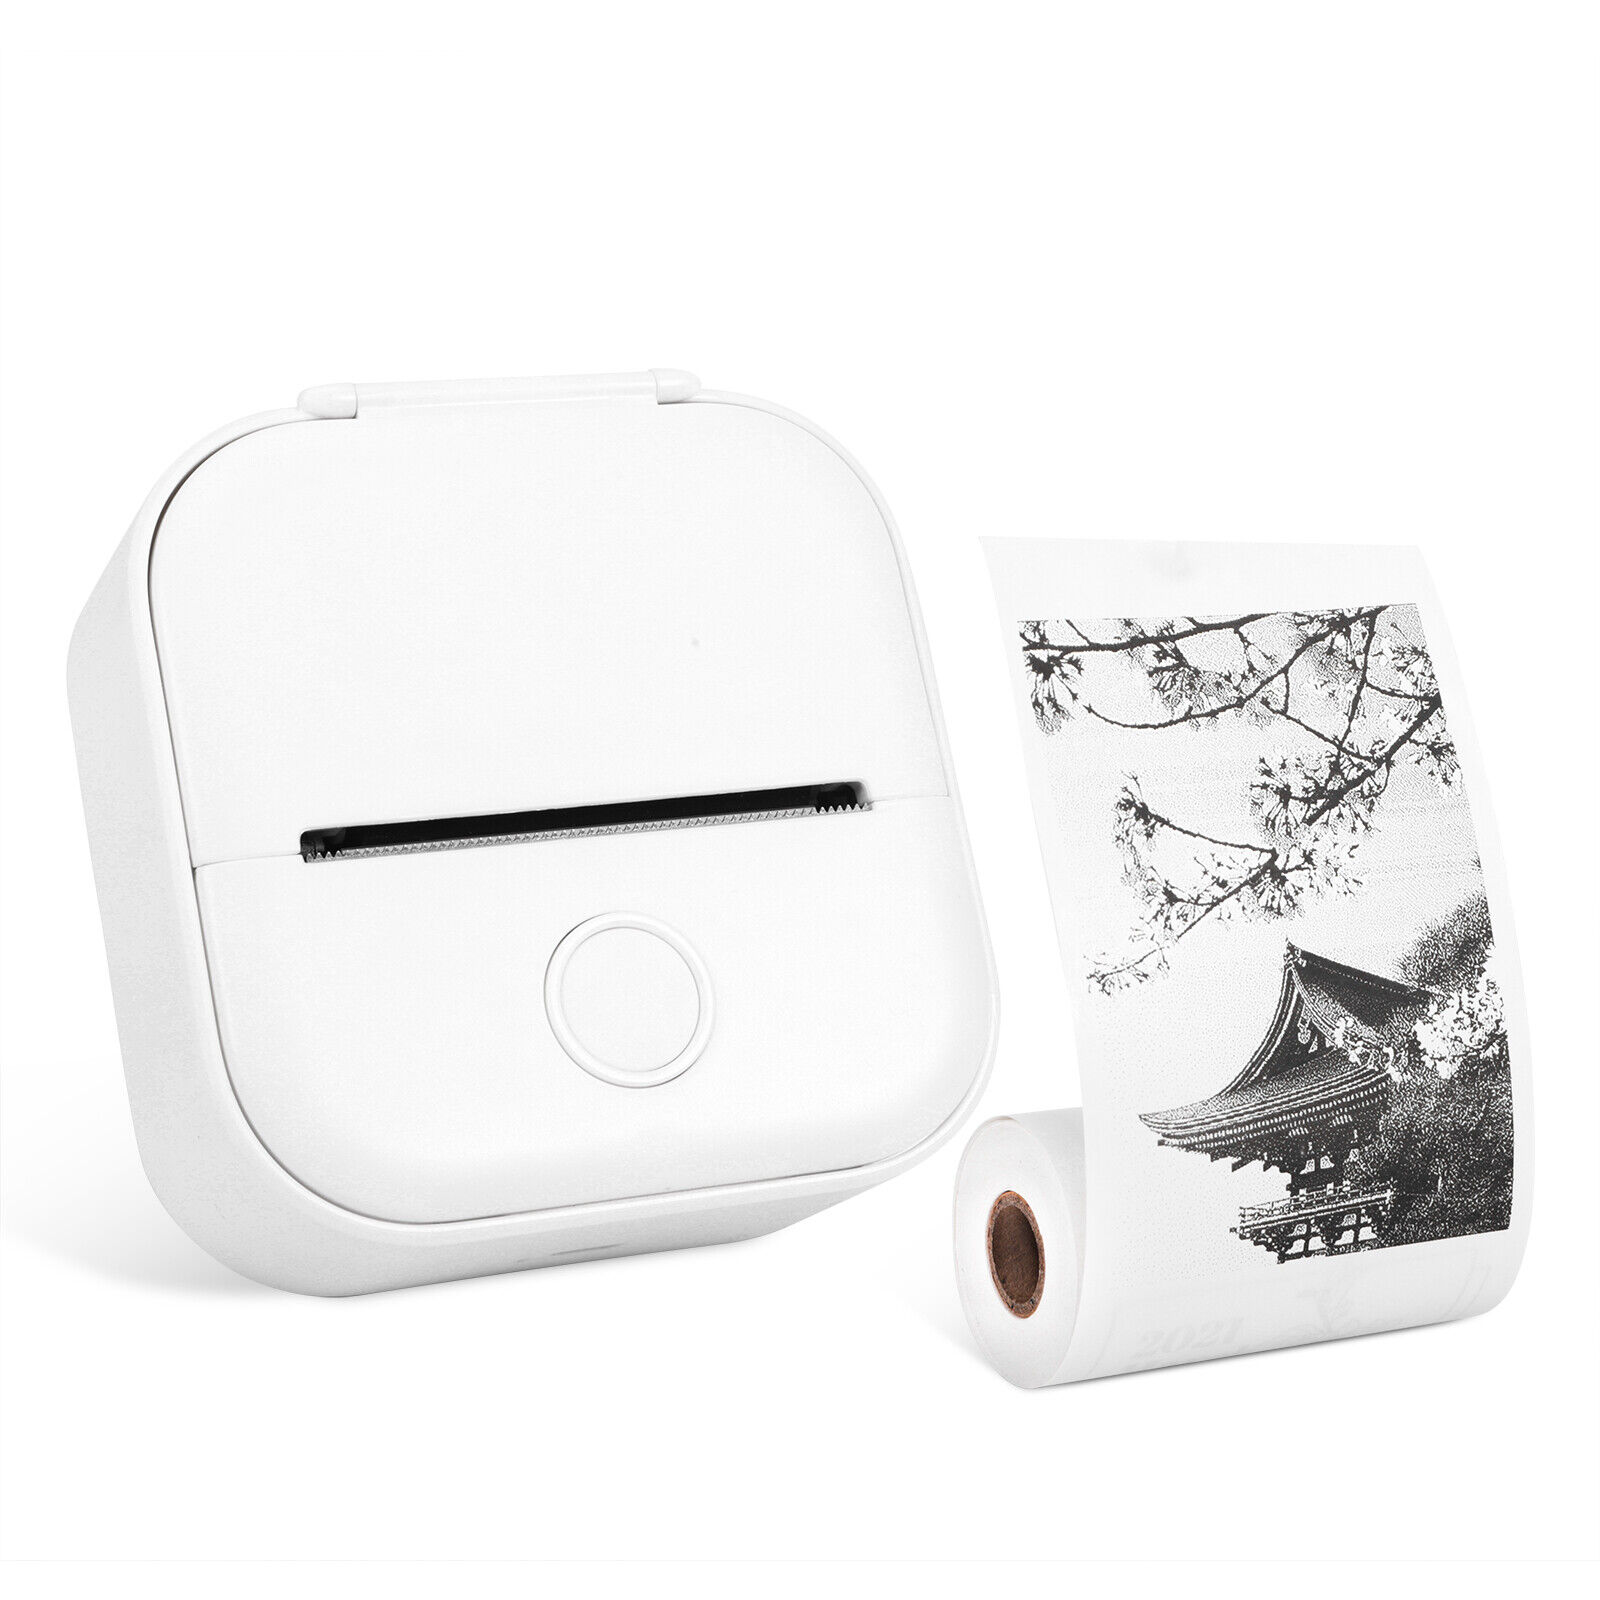 Phomemo Mini Pocket Thermal Printer Wireless Bluetooth Photo T02 or Label Paper